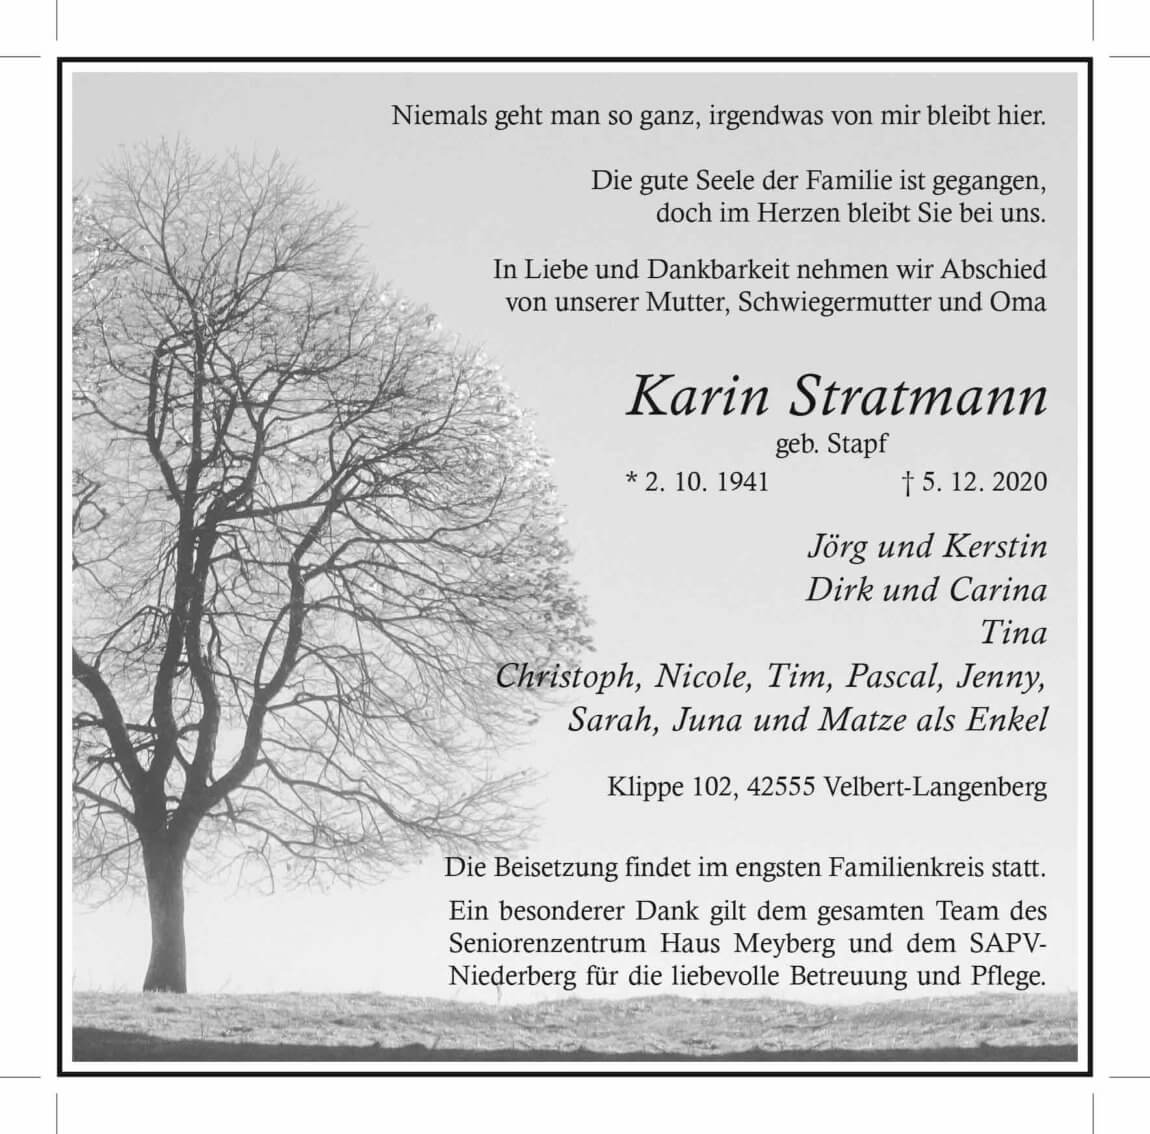 09.12.2020_Stratmann-Karin.jpg